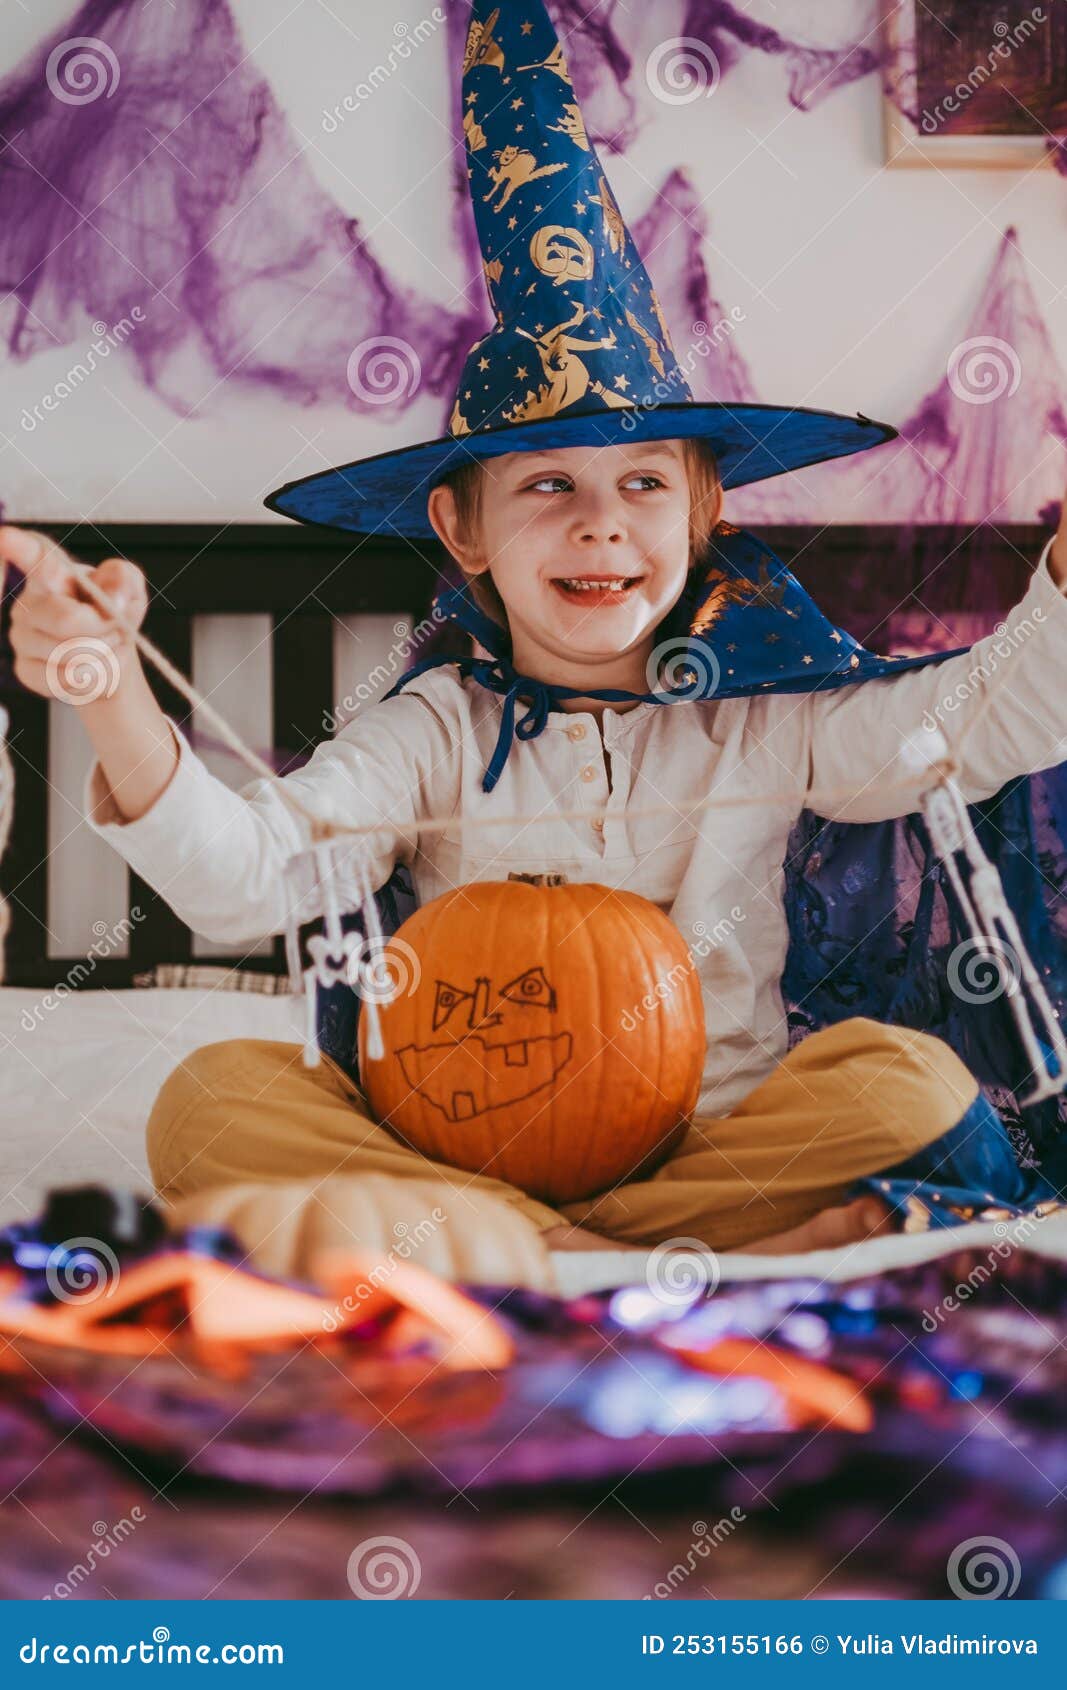 Cute Little Caucasian Boy in a Halloween Costume with Big Orange ...